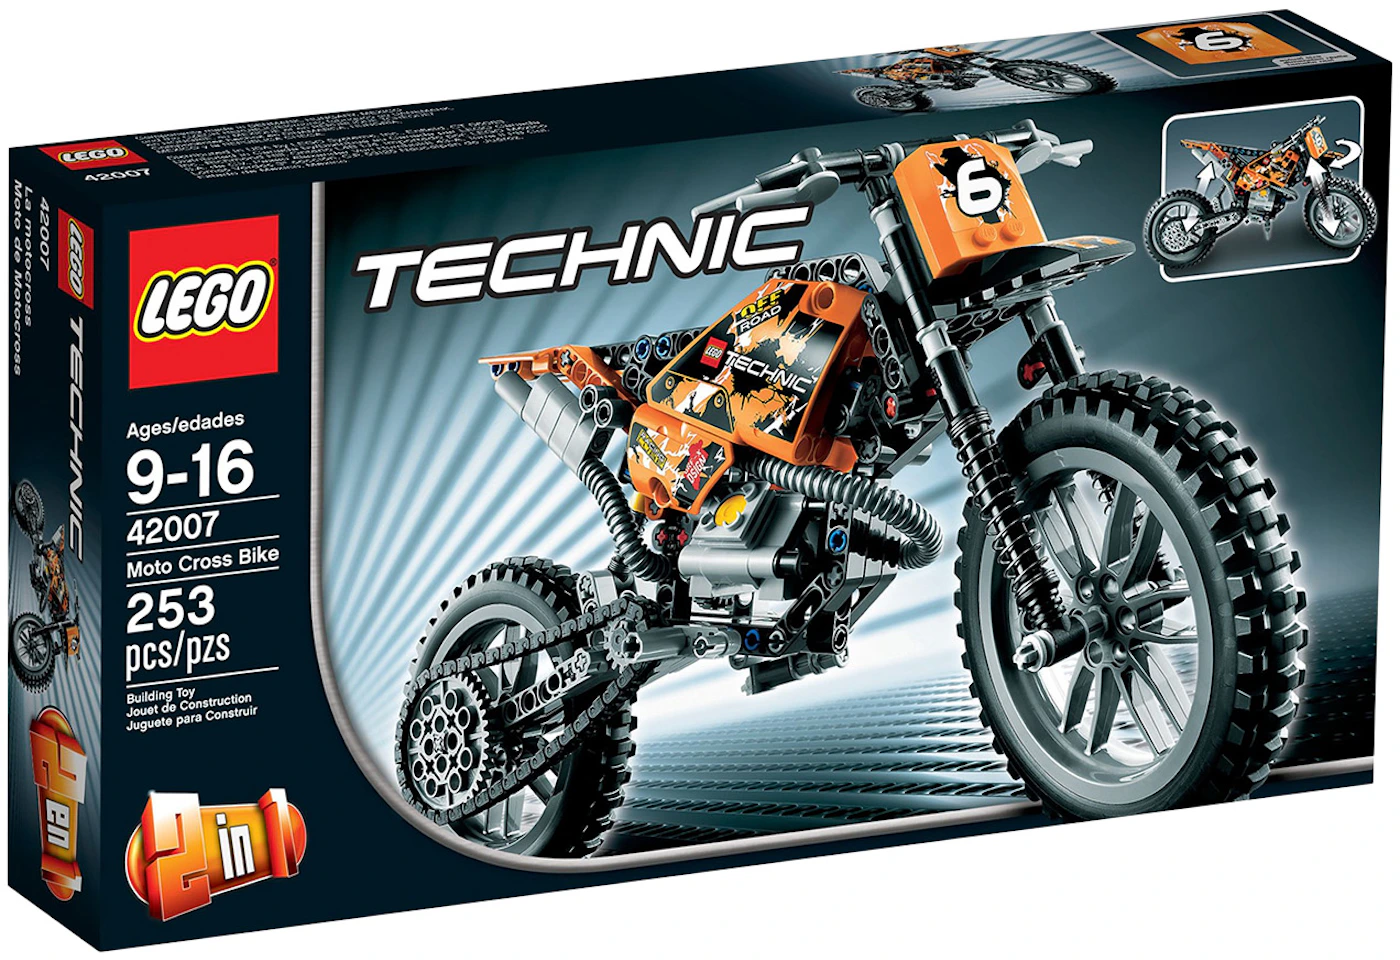 https://images.stockx.com/images/LEGO-Technic-Moto-Cross-Bike-Set-42007.jpg?fit=fill&bg=FFFFFF&w=700&h=500&fm=webp&auto=compress&q=90&dpr=2&trim=color&updated_at=1643125496